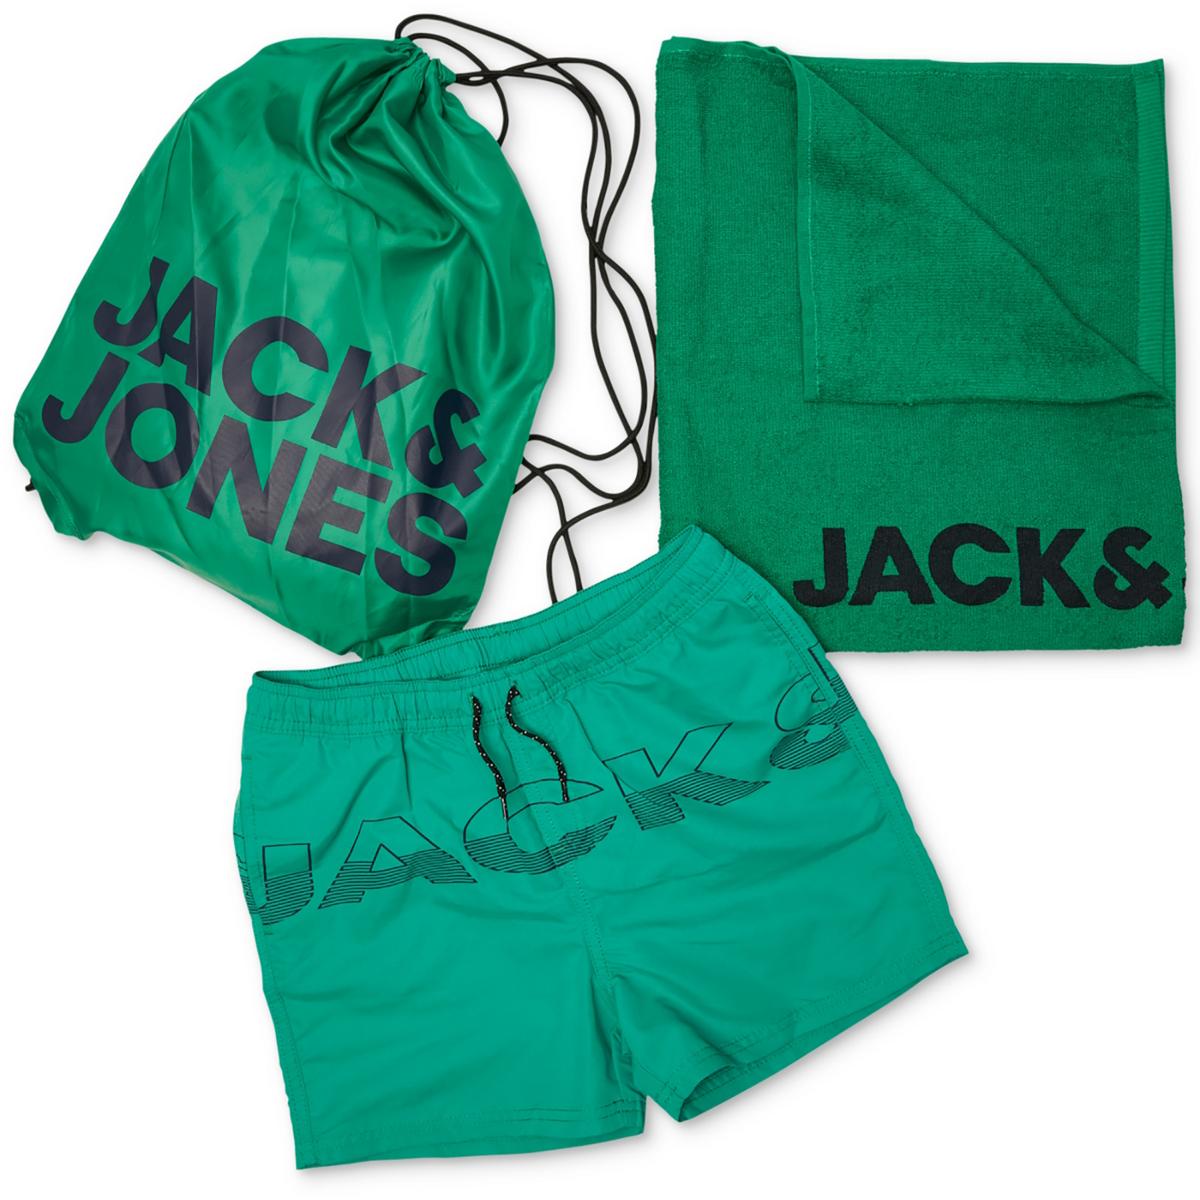 Jack & Jones Mens Boardshorts Beachwear Swim Trunks